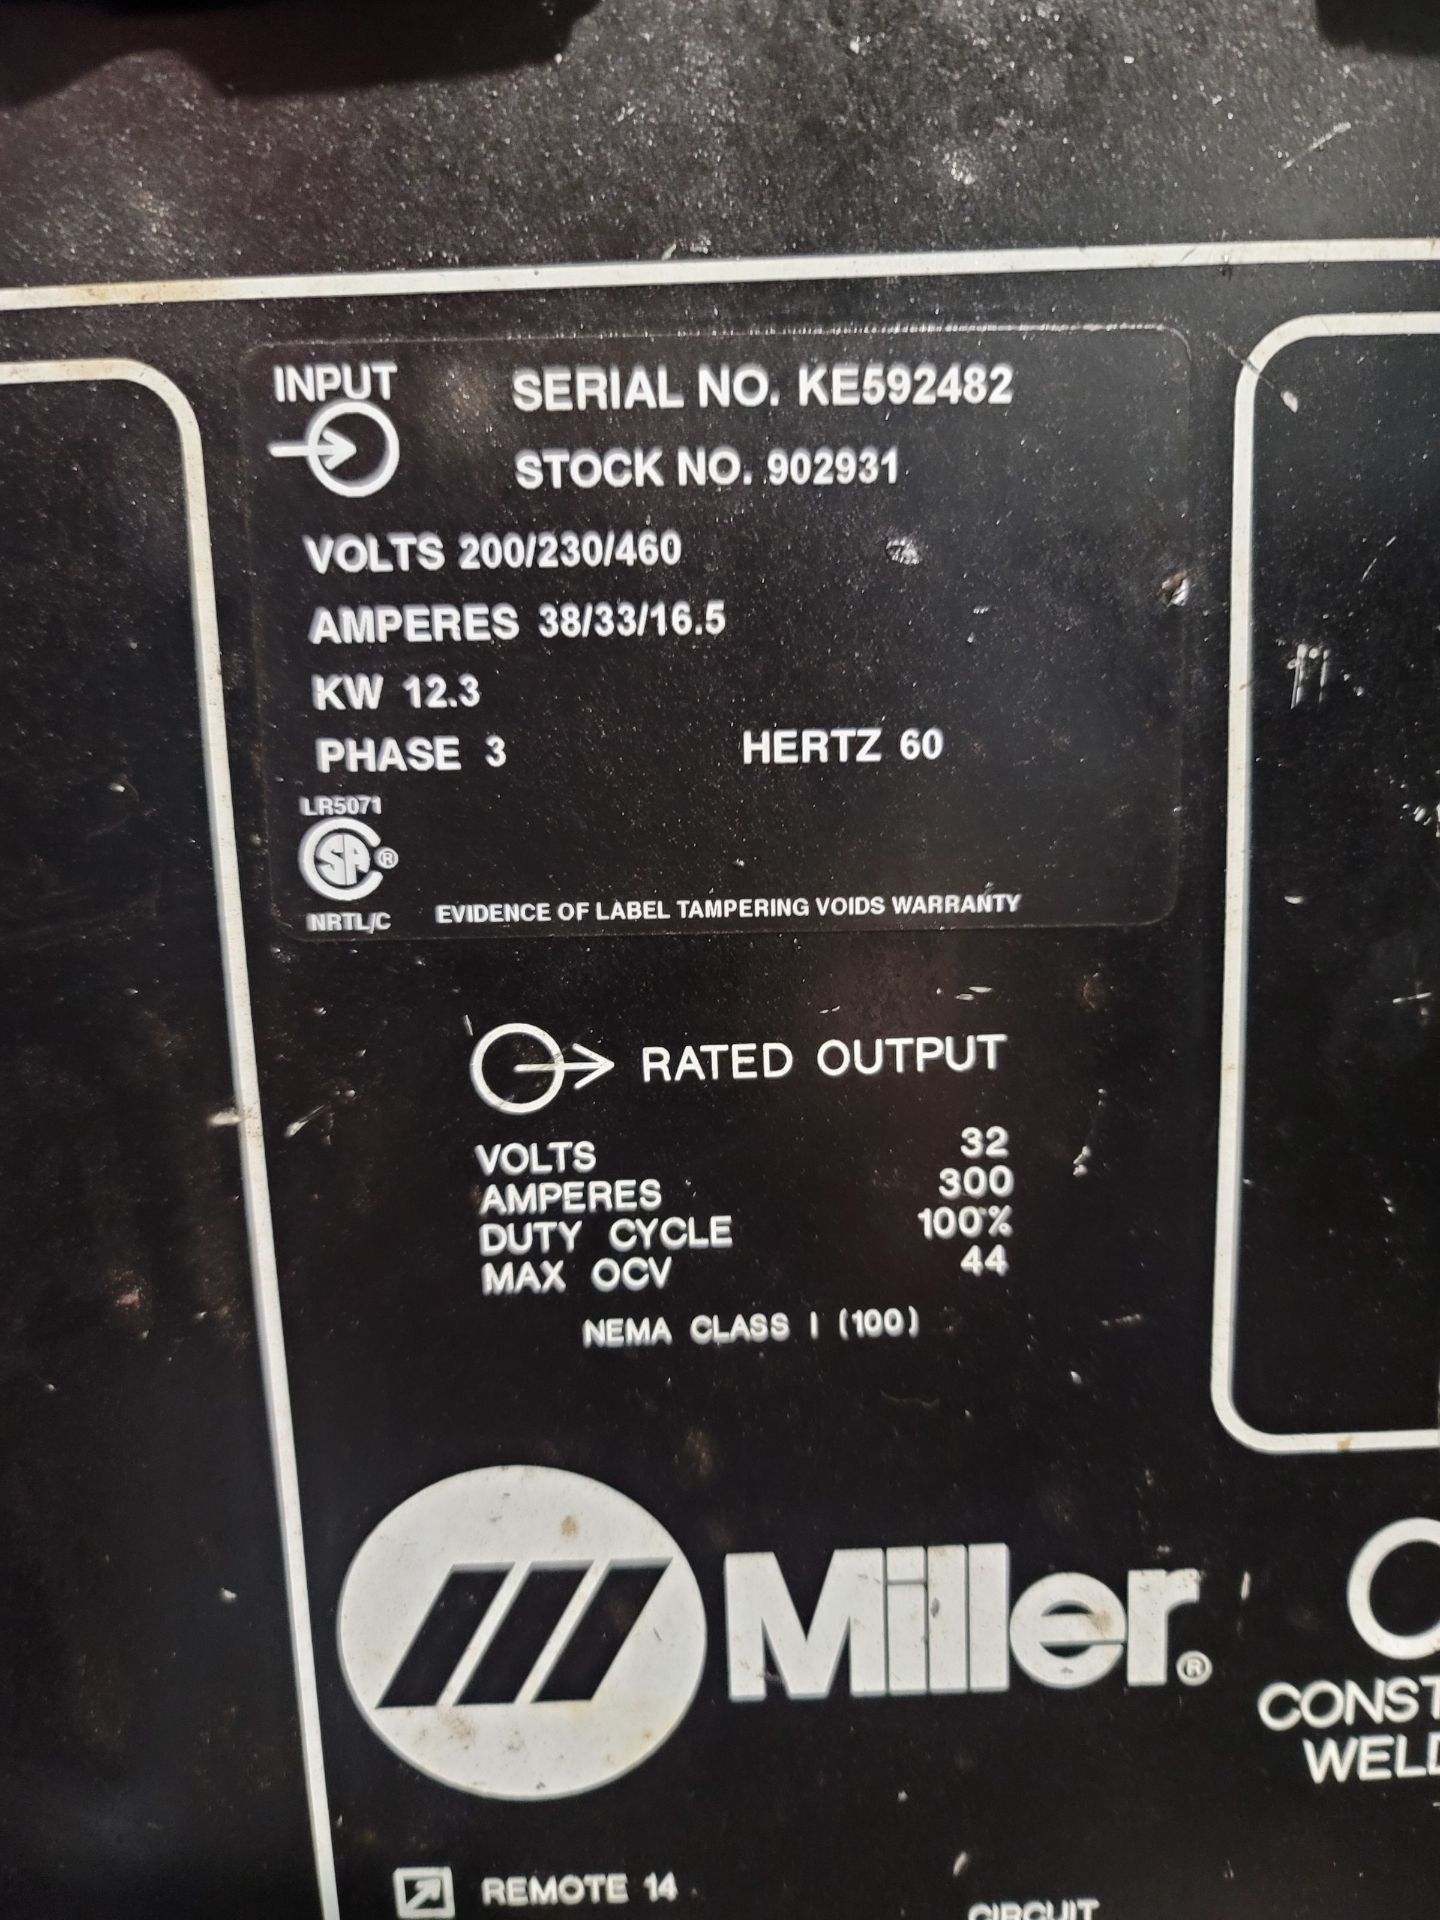 MILLER CP-300 CV-DC WELDING POWER SOURCE, STOCK NO. 902931, S/N KE592482 - Image 3 of 3